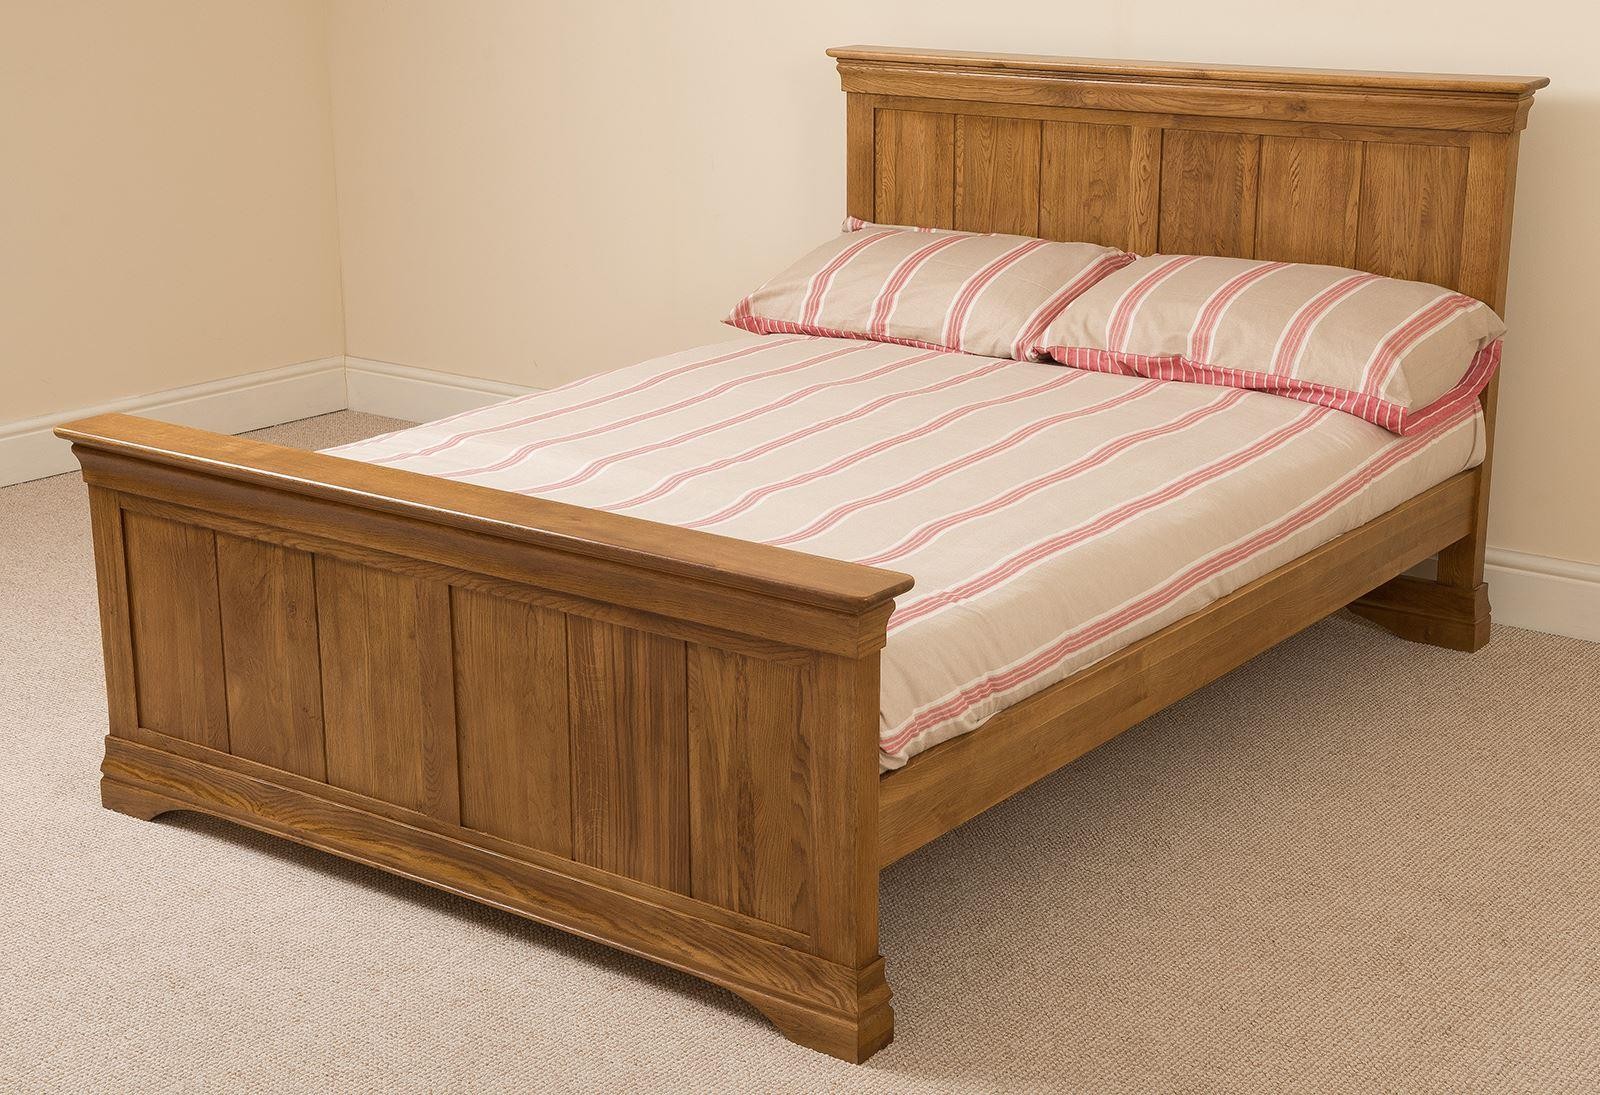 French Cau Oak King Size Bedframe, Full Size Bed Frame And Mattress Set